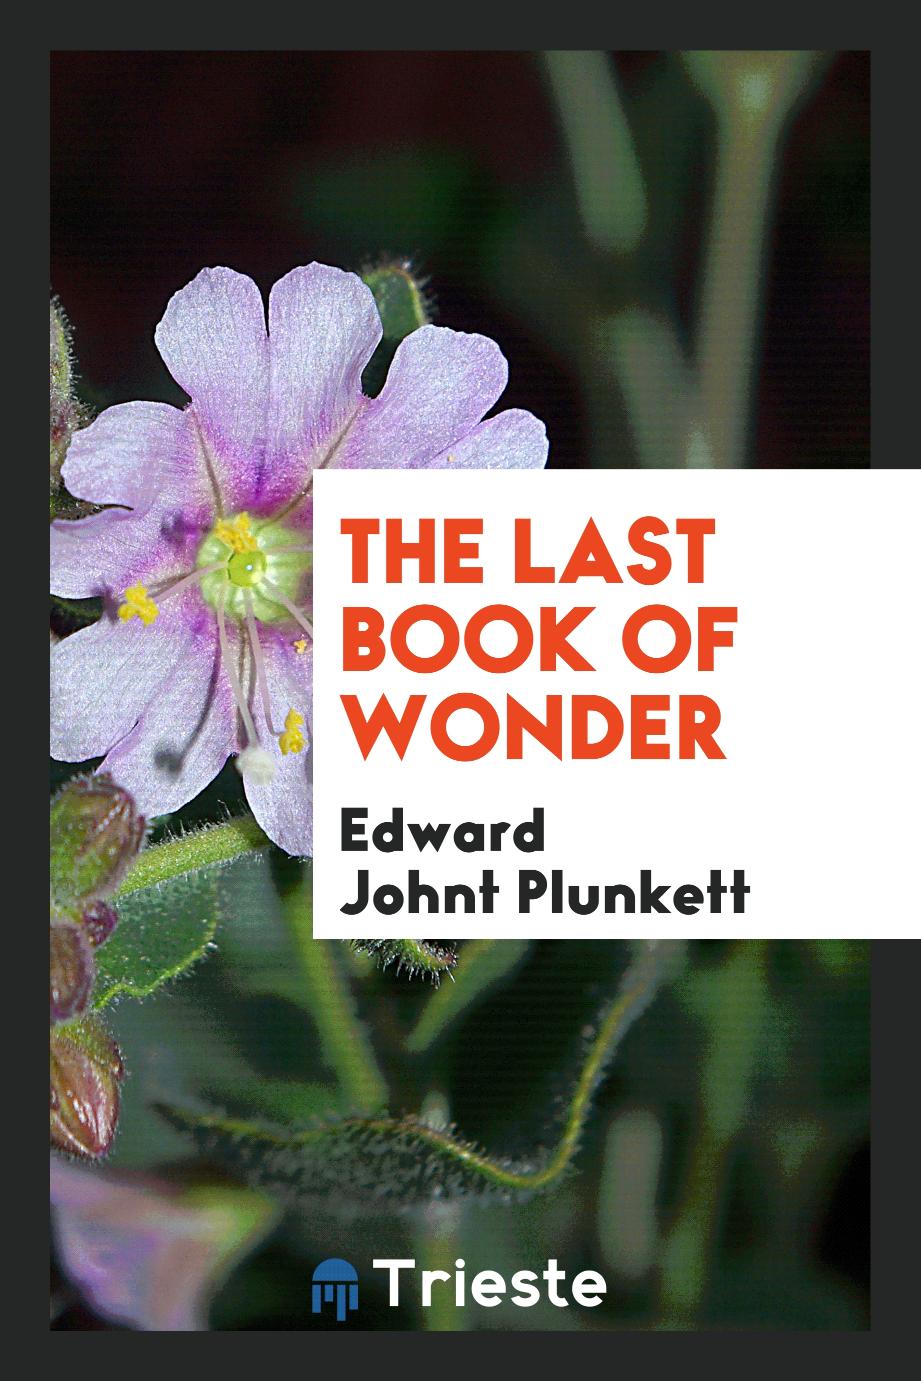 The last book of wonder